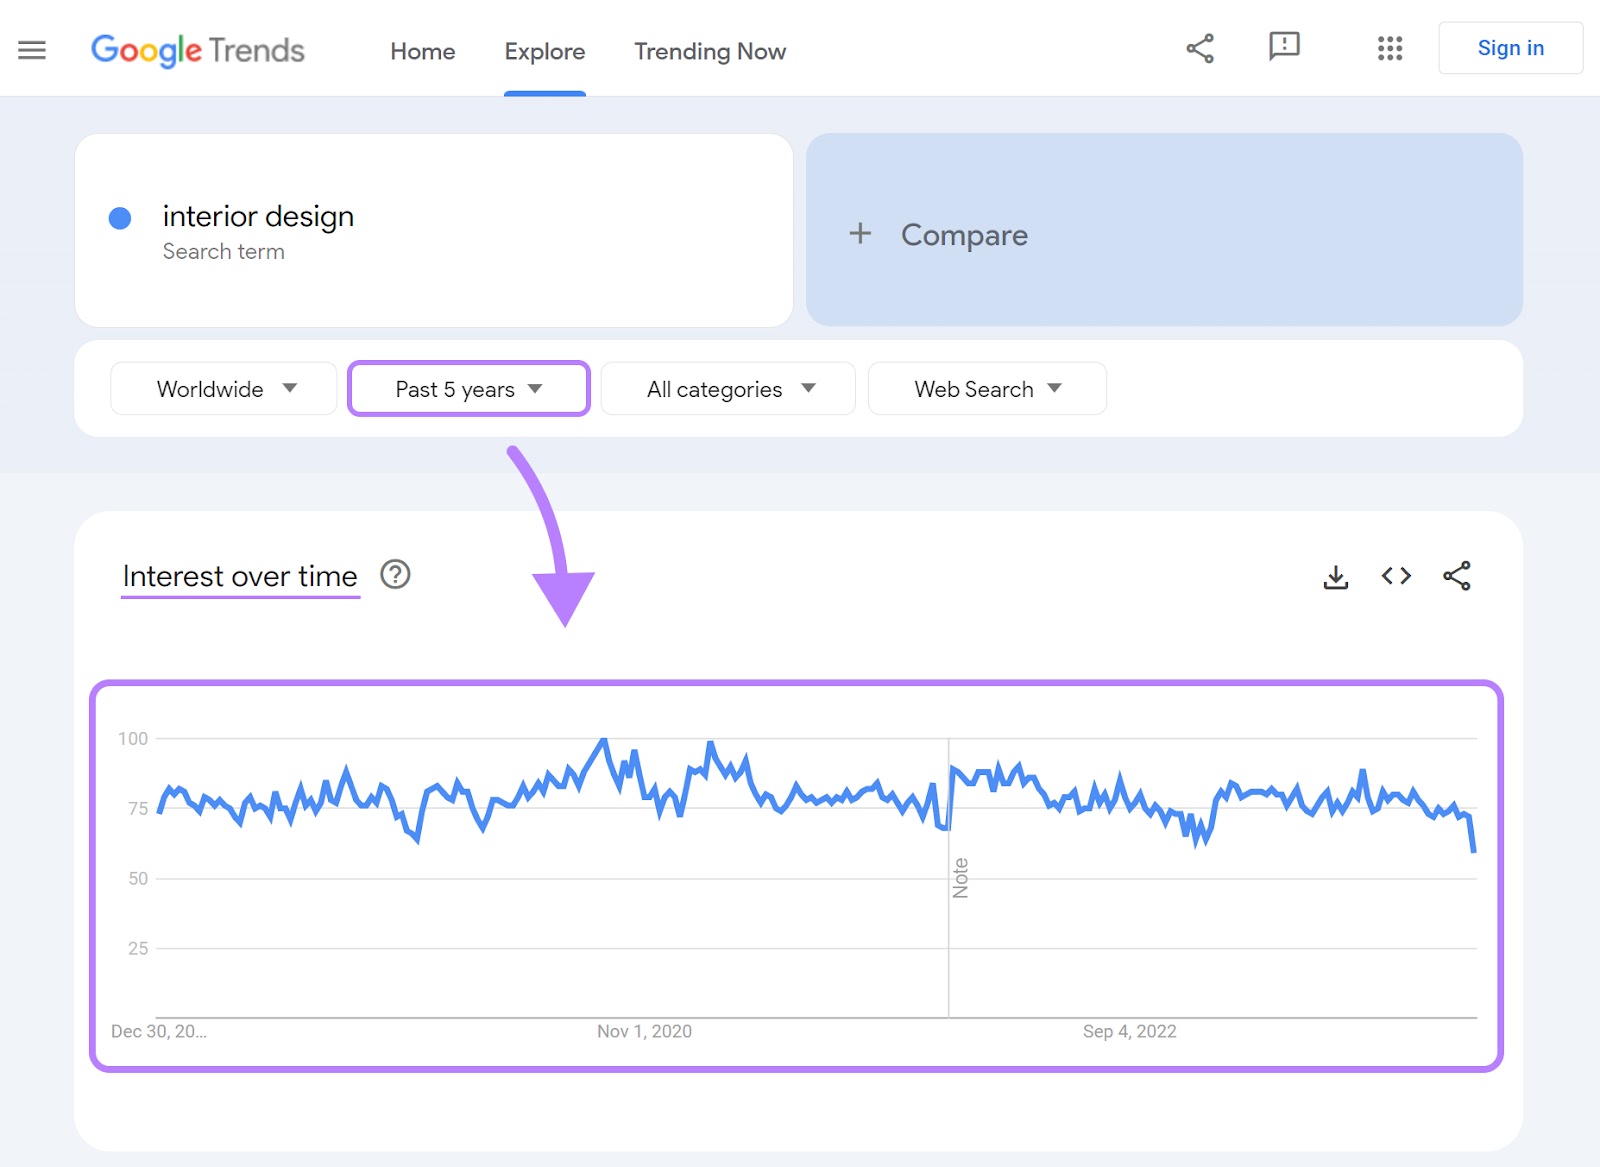 Google Trends interest over time graph for "interior design"